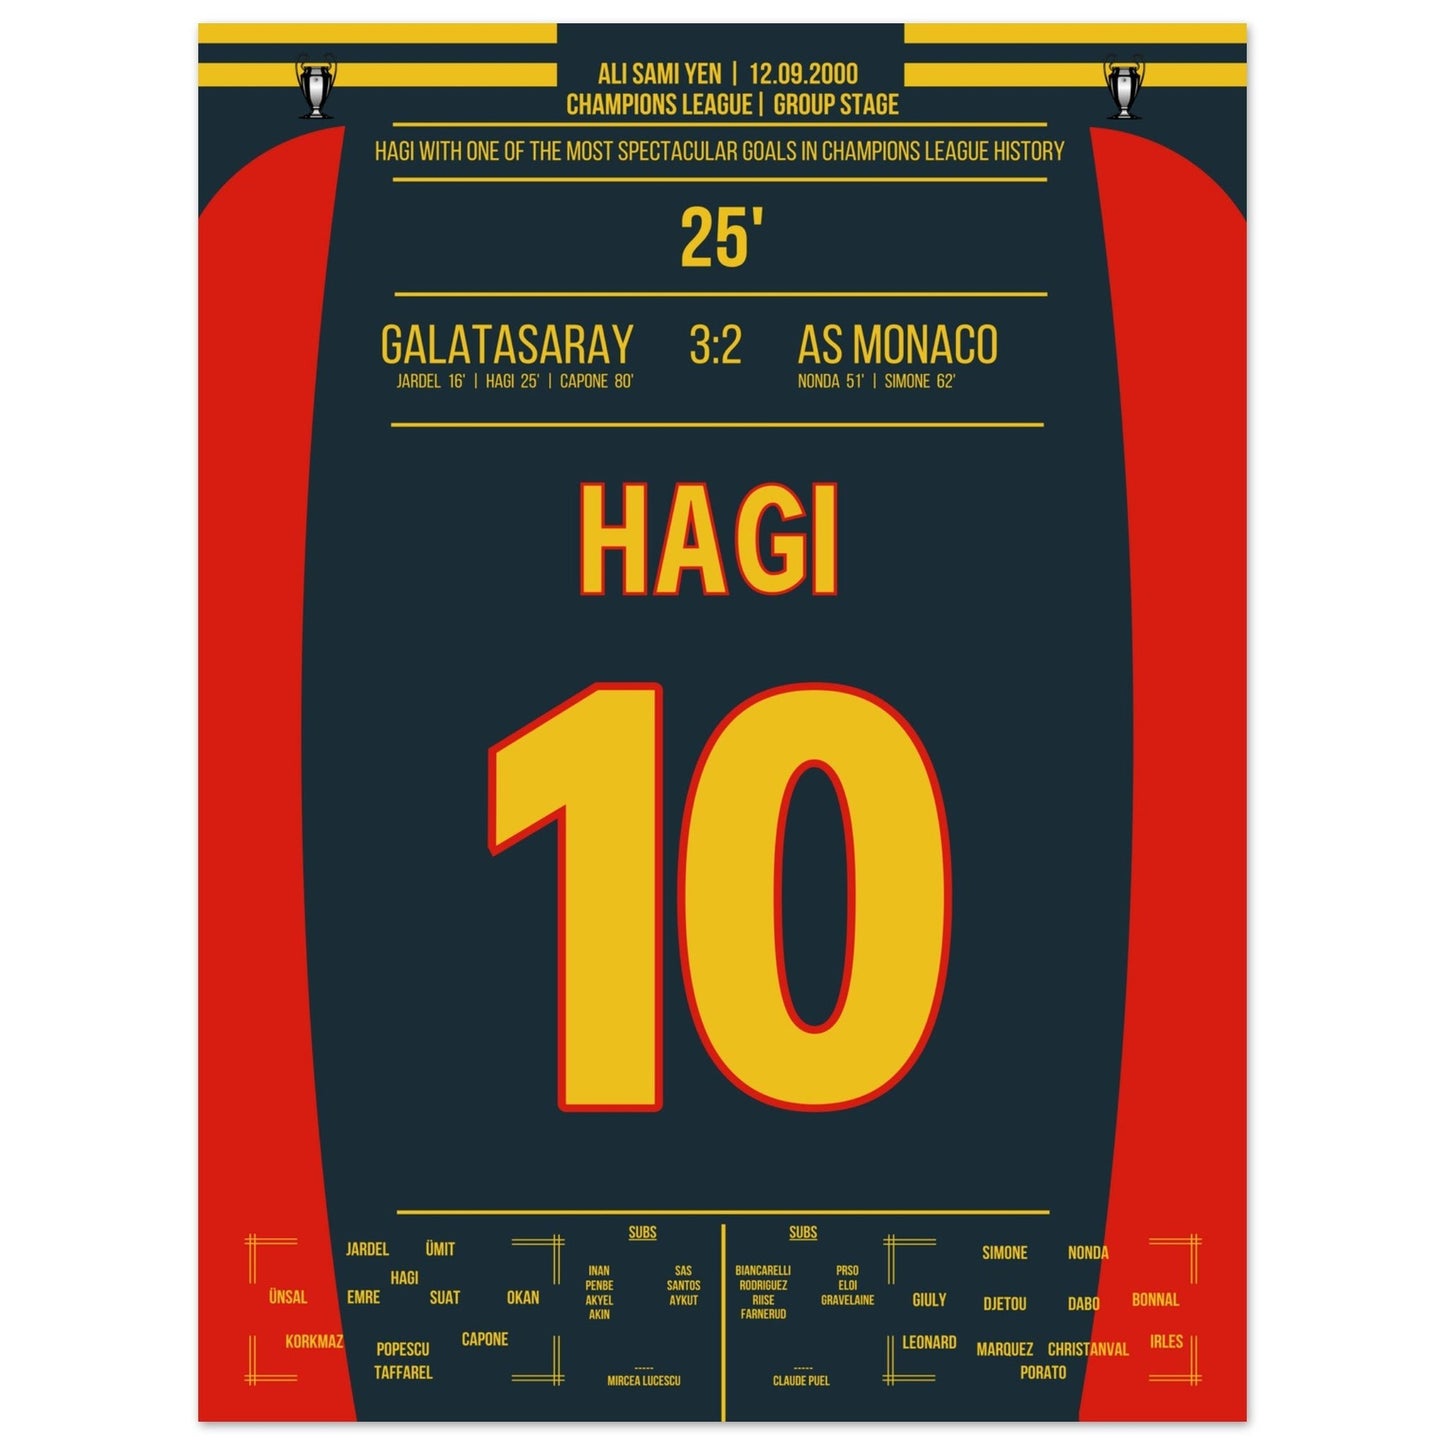 Hagi's dream goal from distance against Monaco